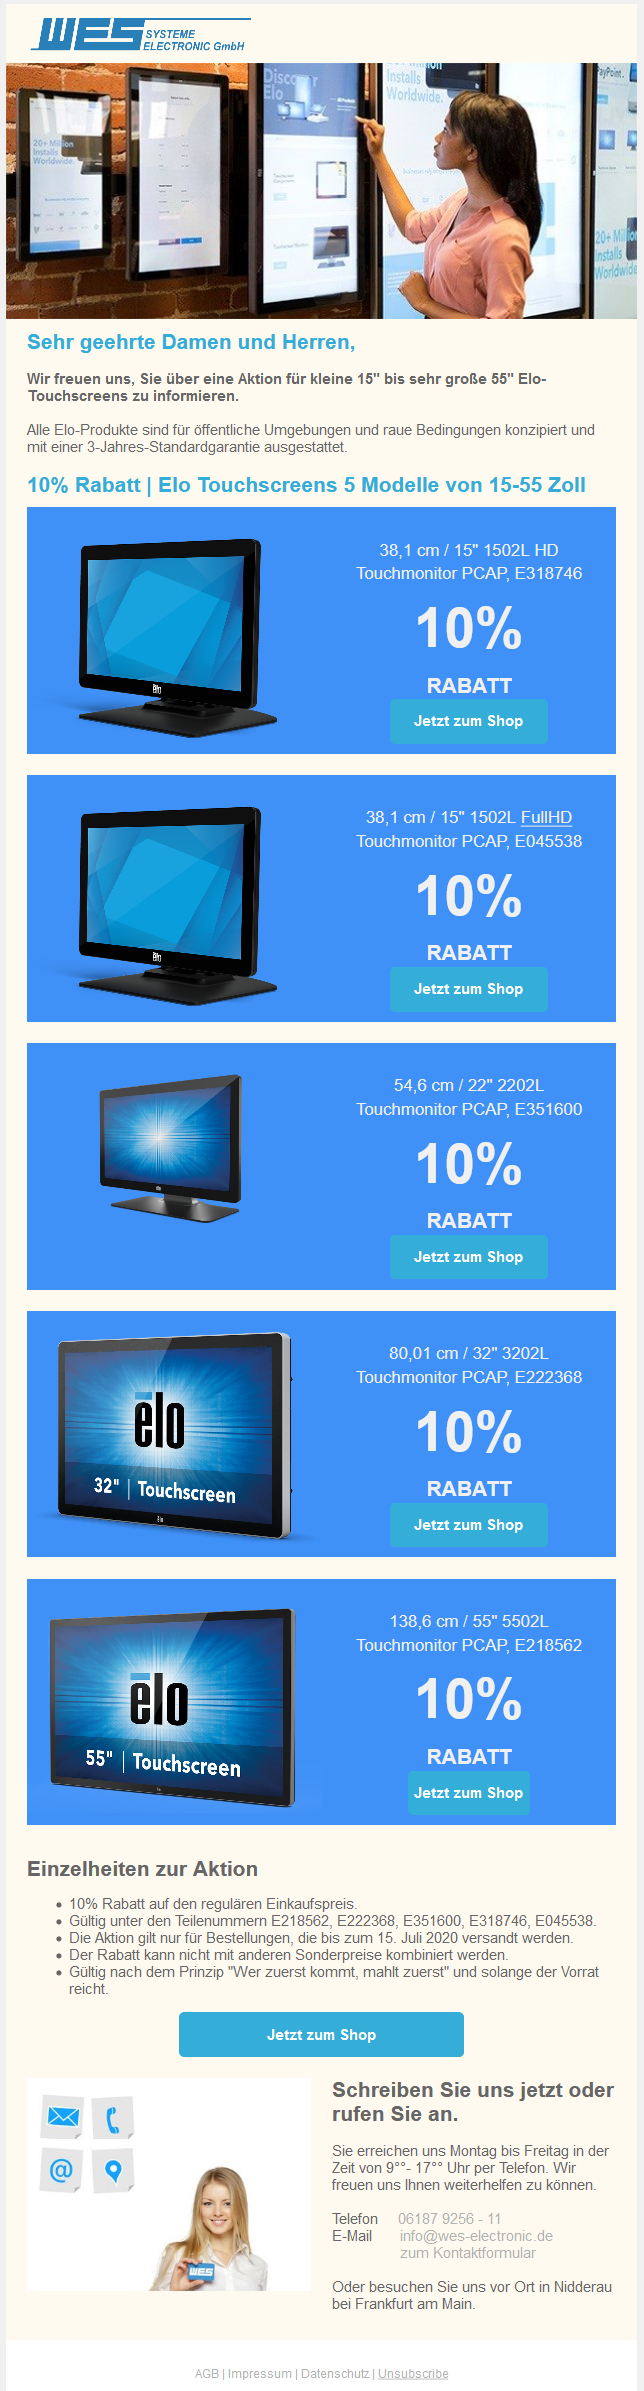 Newsletter 10 Prozent Rabatt Elo Touchscreens 5 Modelle von 15 55 Zoll